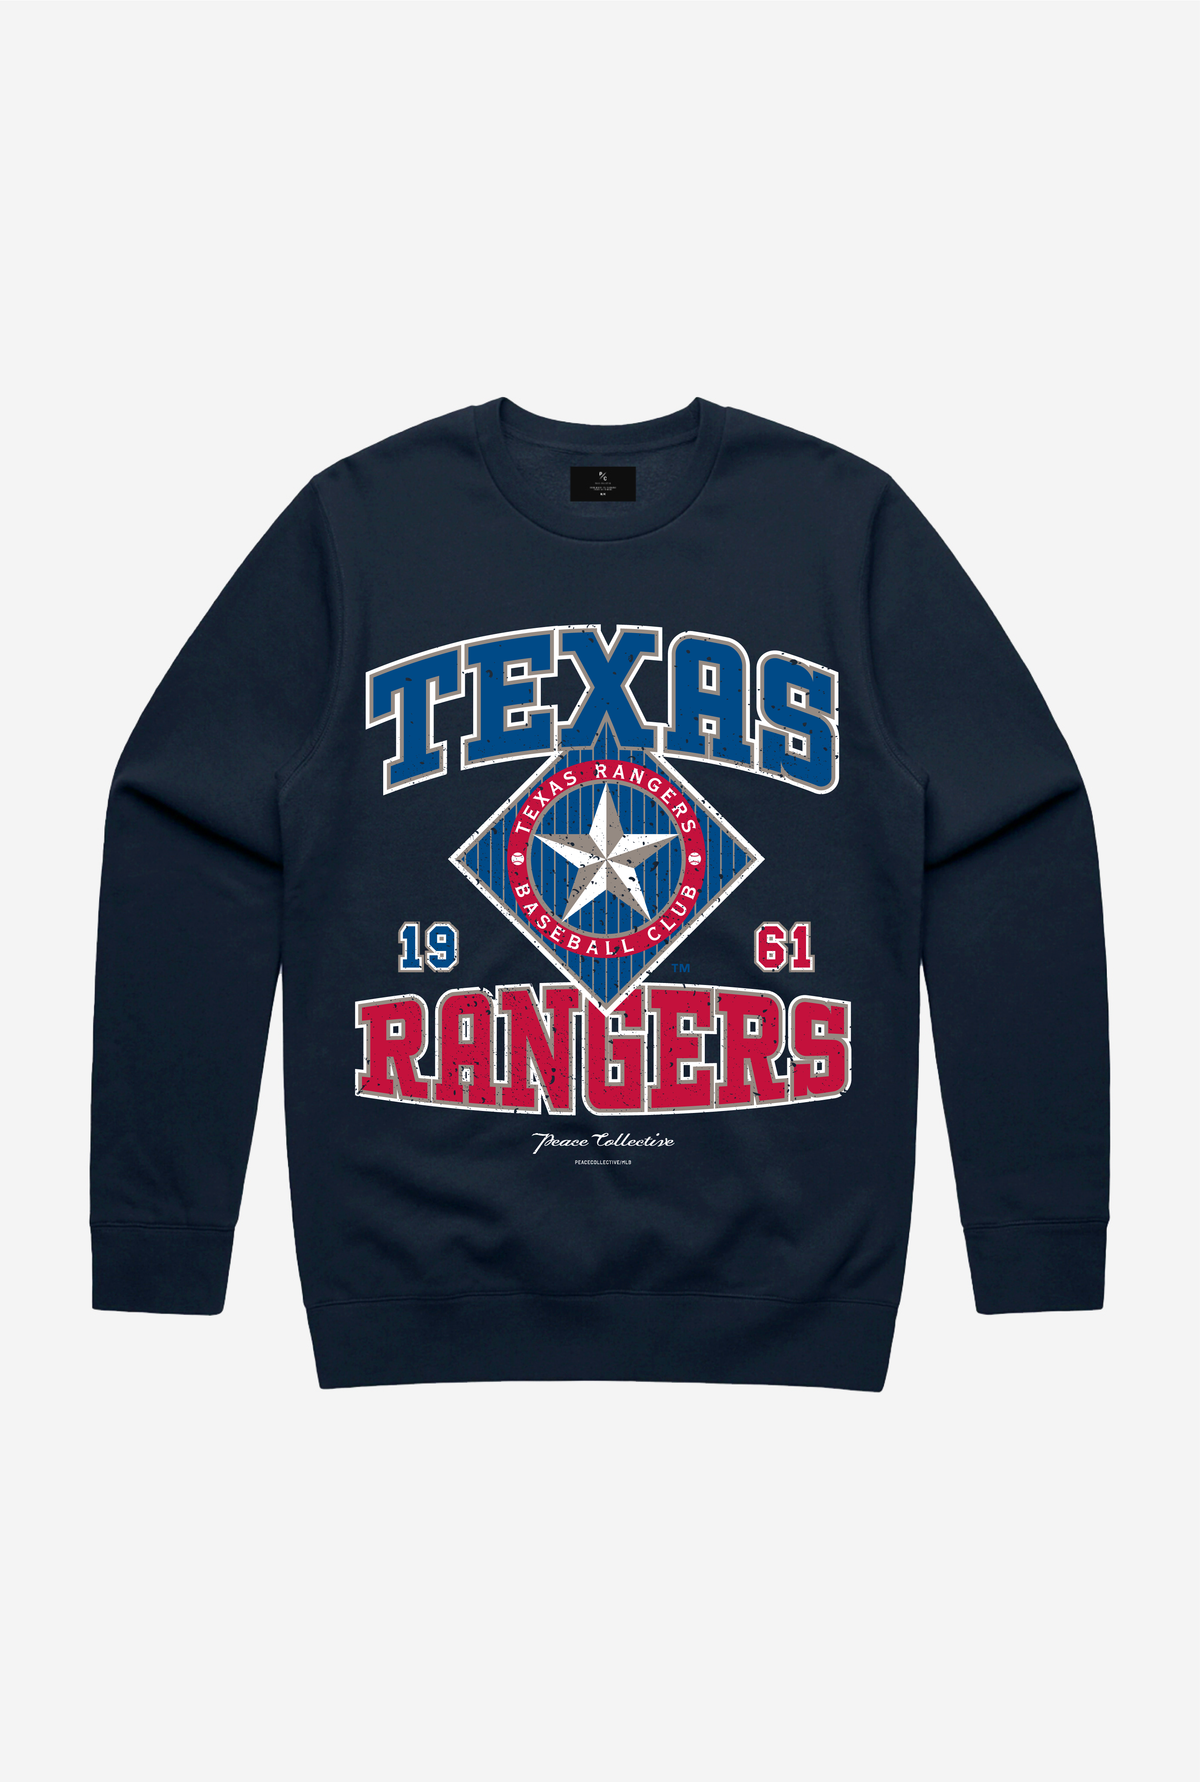 Texas Rangers Vintage Washed Crewneck - Navy